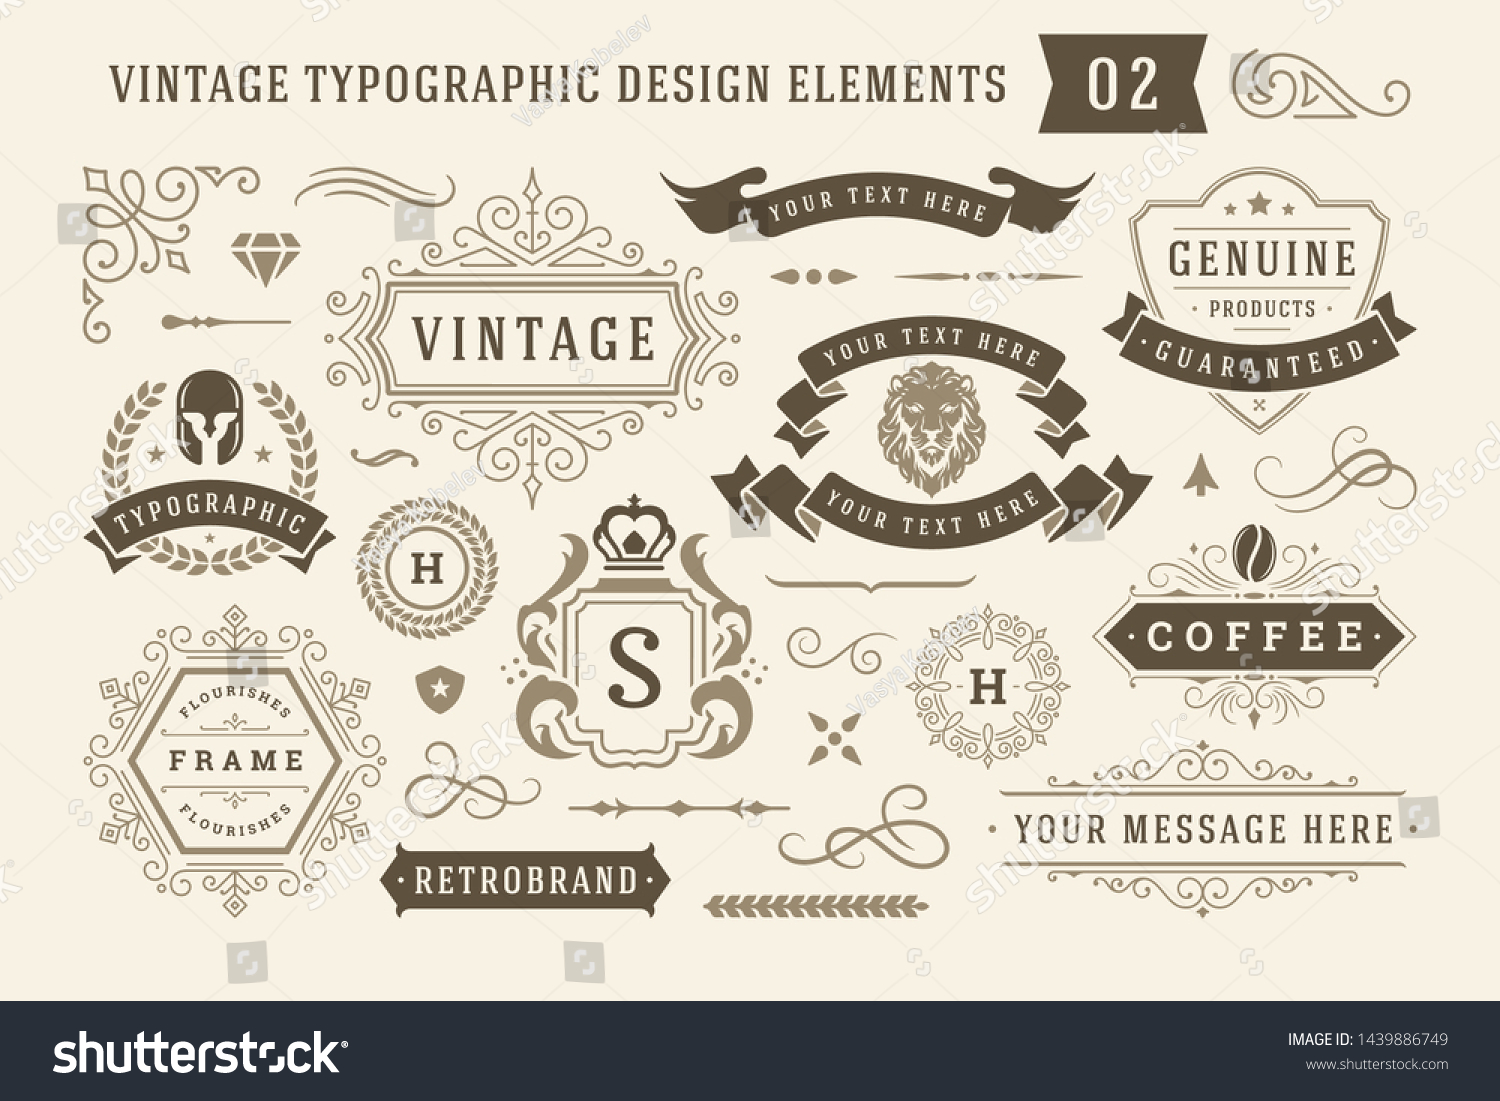 Vintage Typographic Design Elements Set Vector Stock Vector (Royalty ...